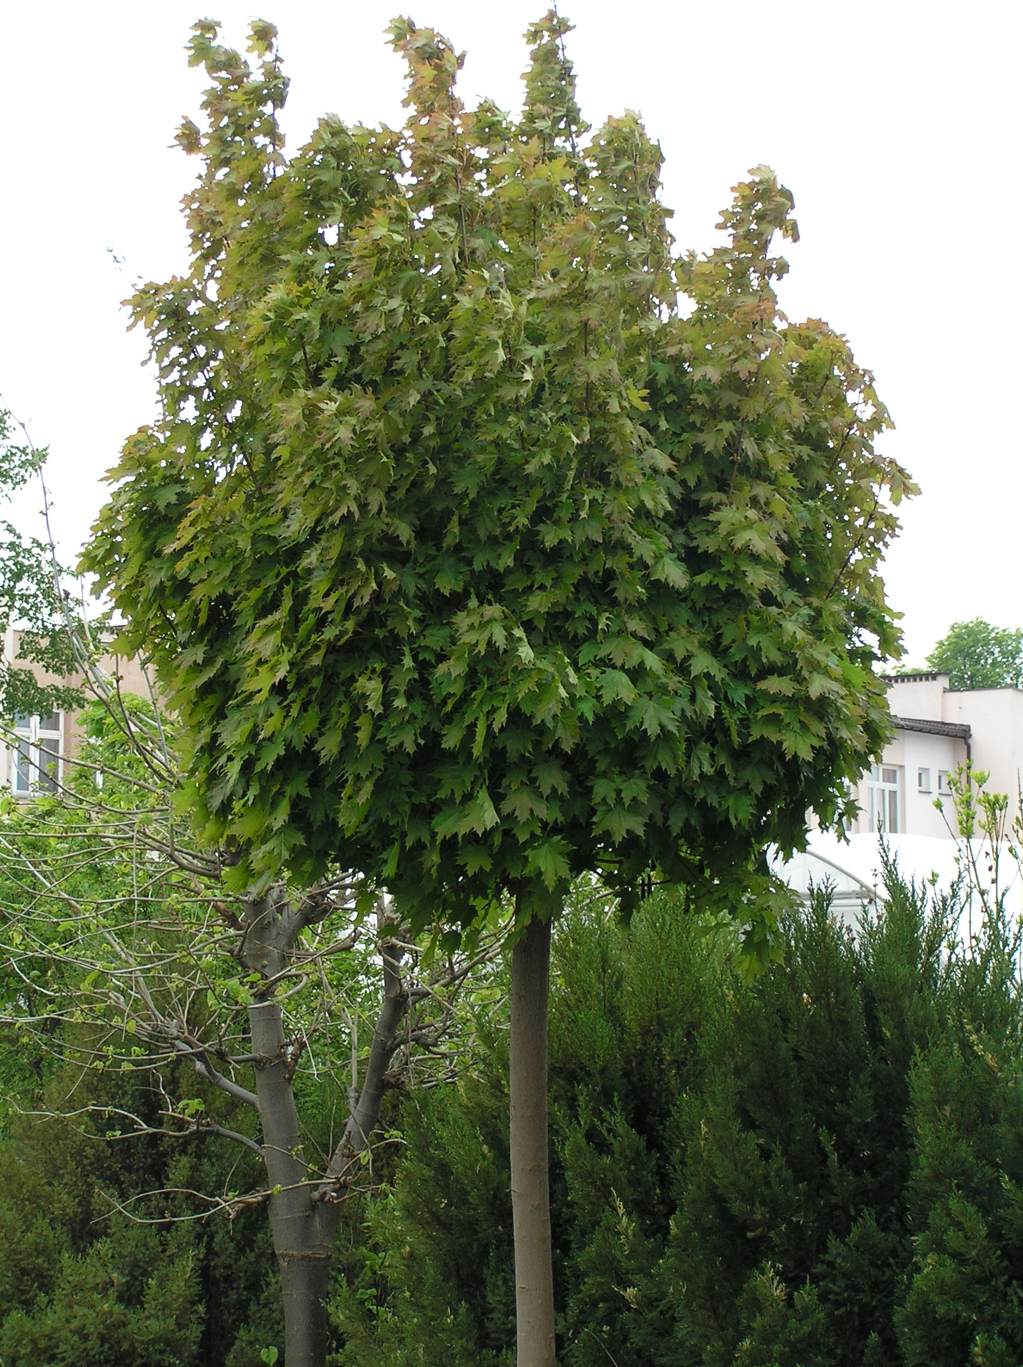 Klon zwyczajny "Globosum" / Acer platanoides "Globosum"